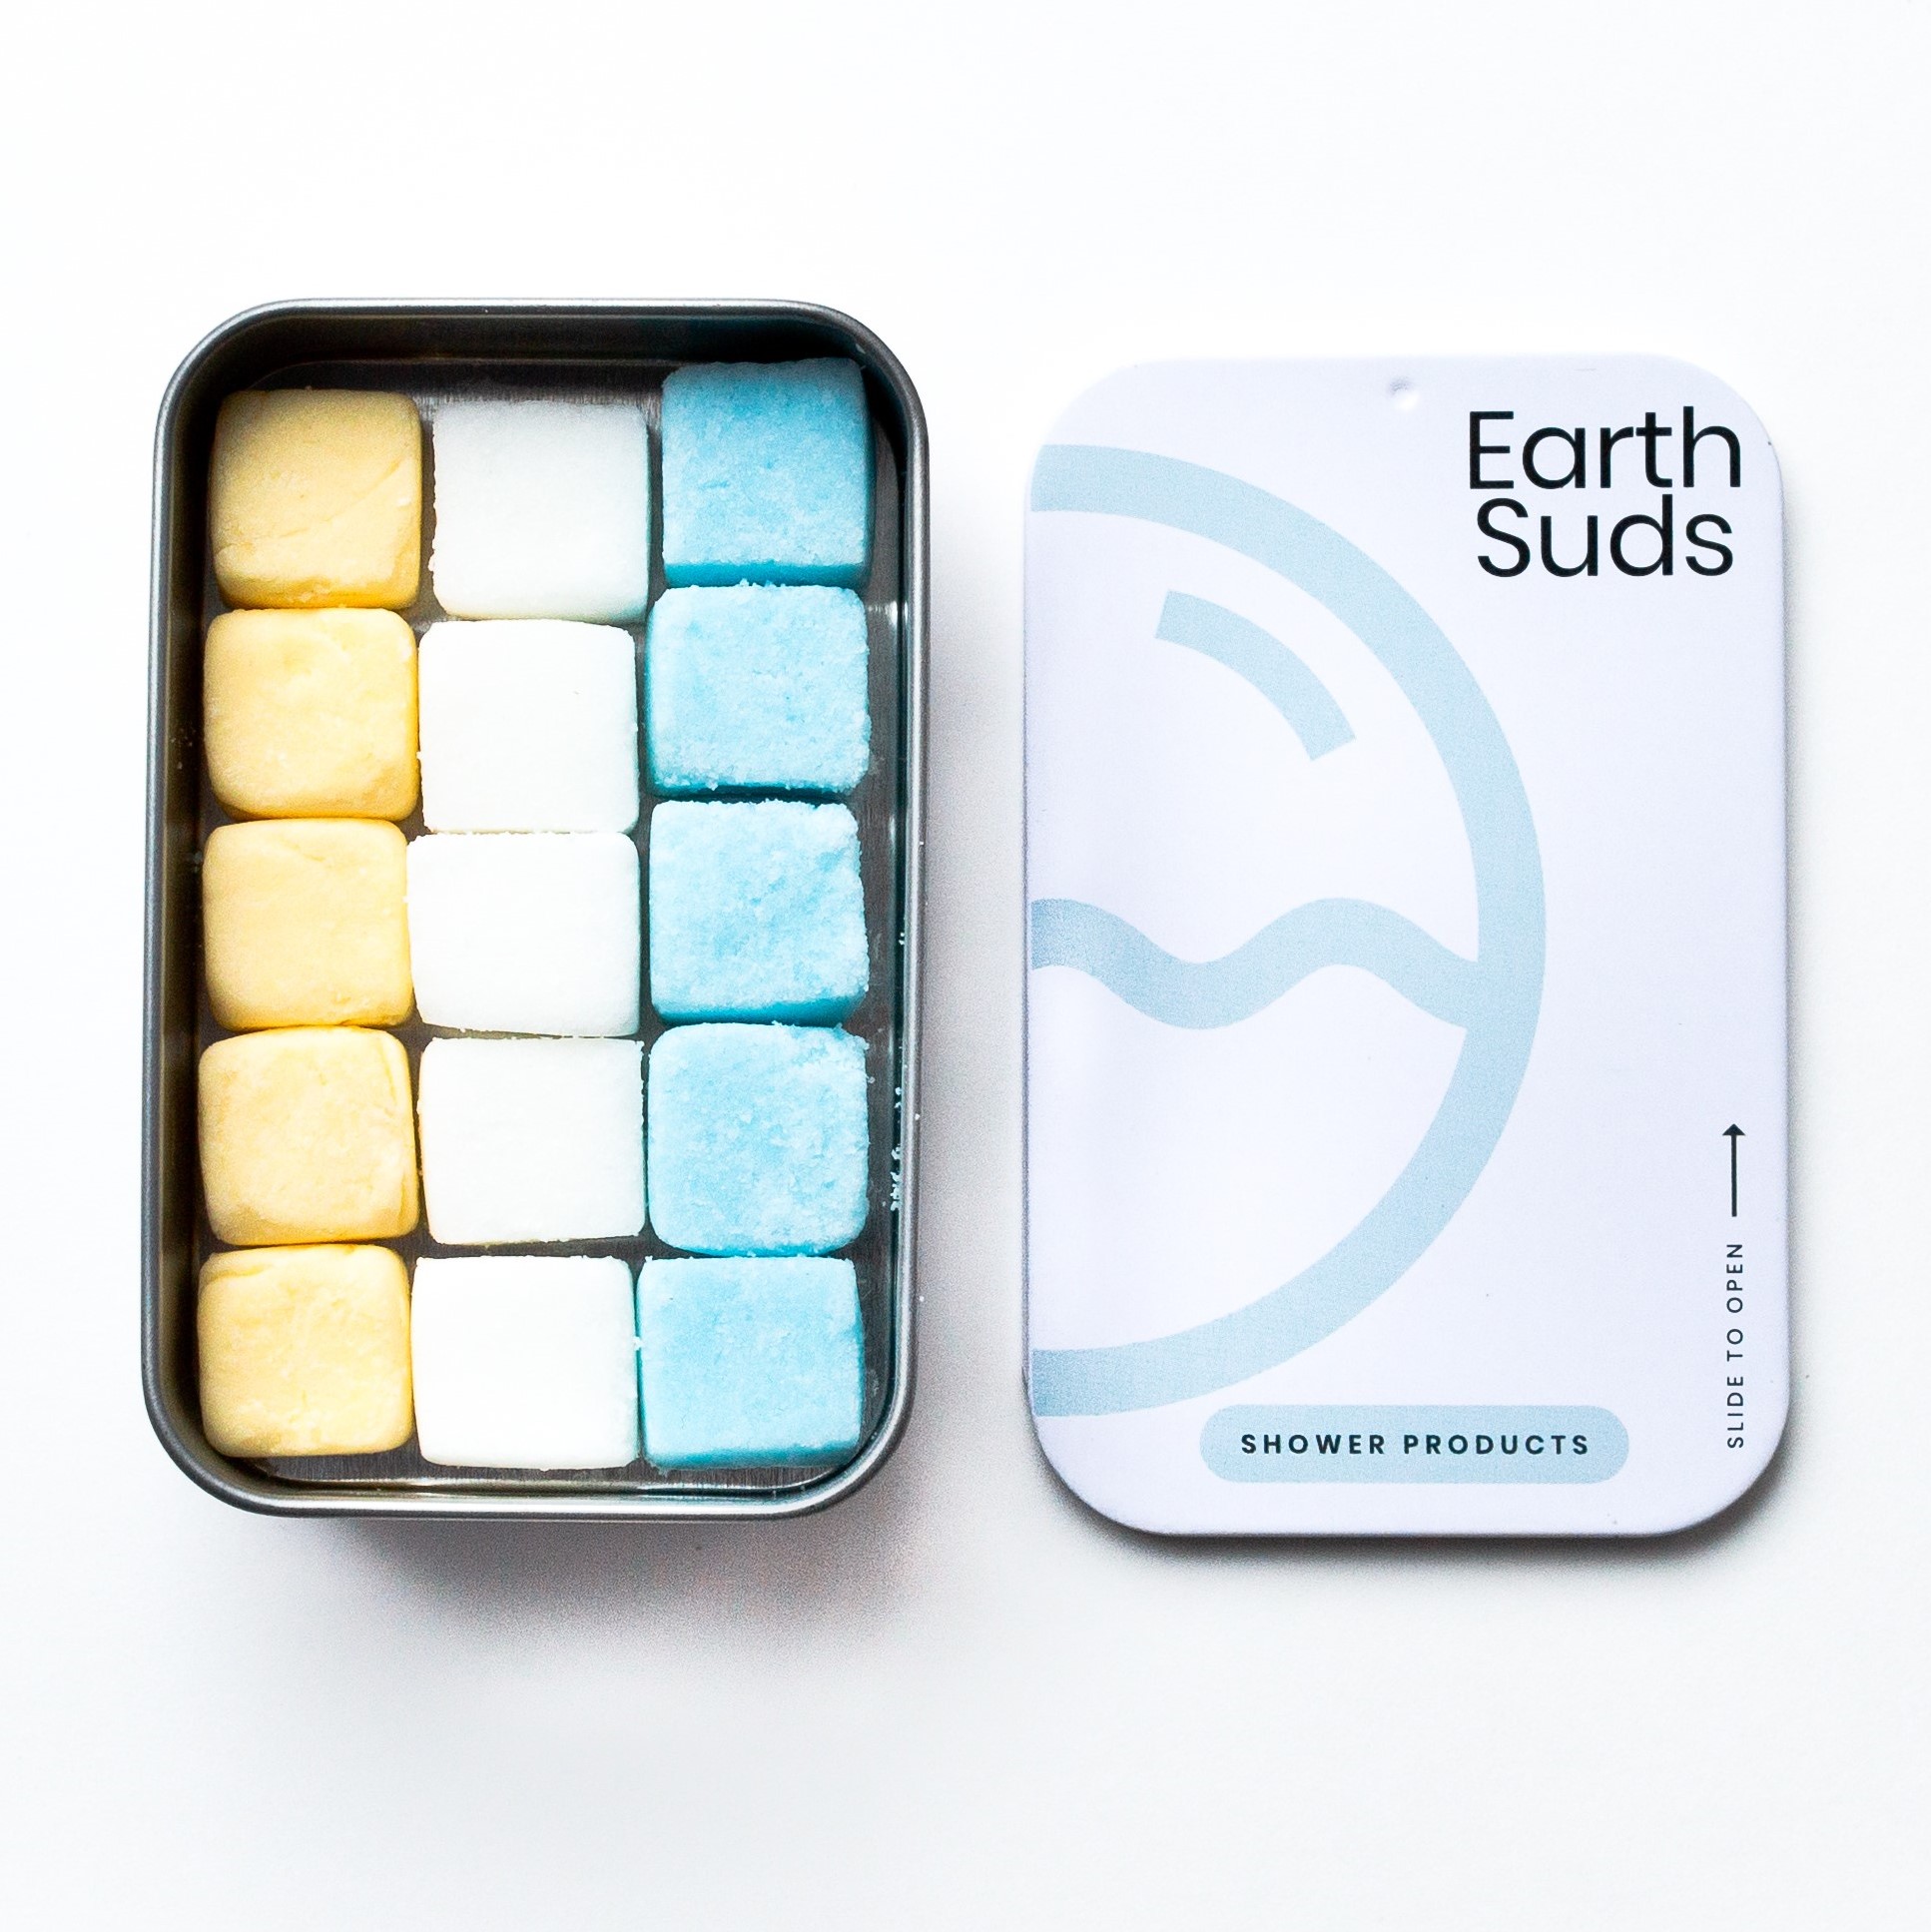 Box of EarthSuds soap